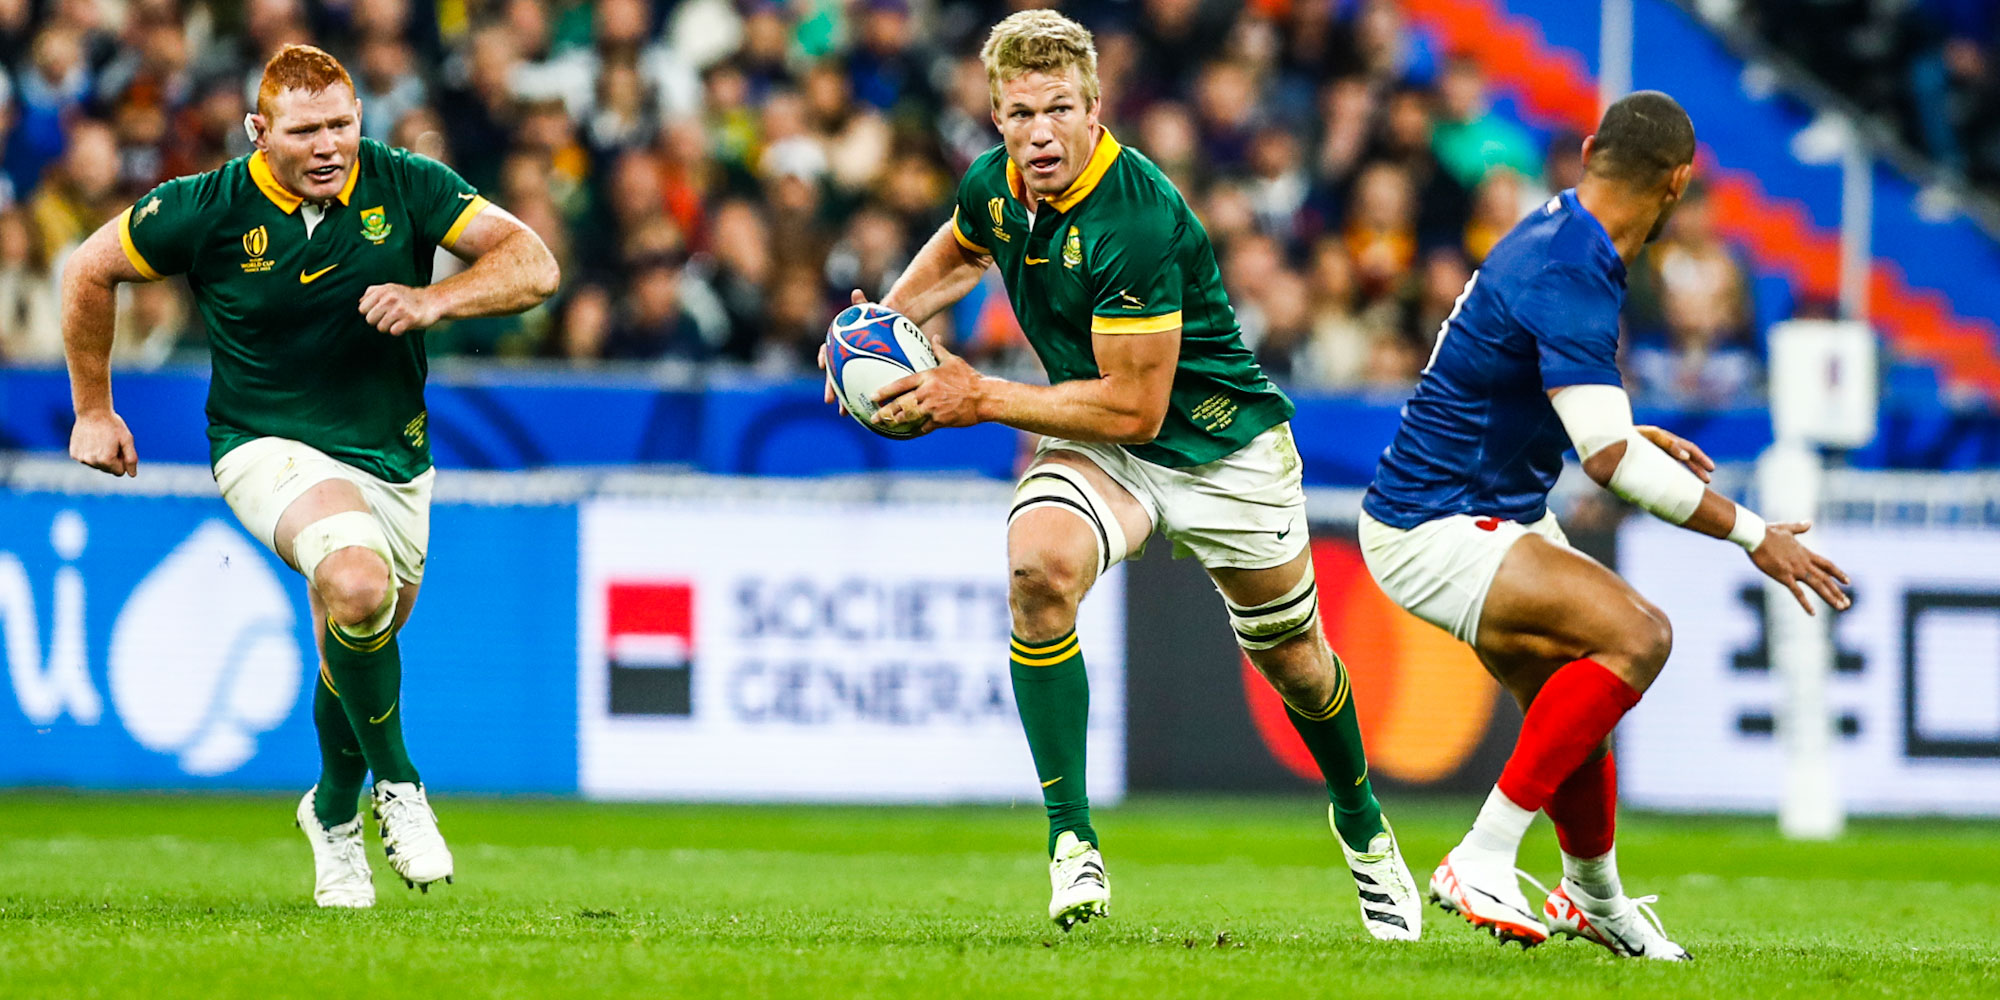 Boks: “We’ll make sure we pitch up” | SA Rugby